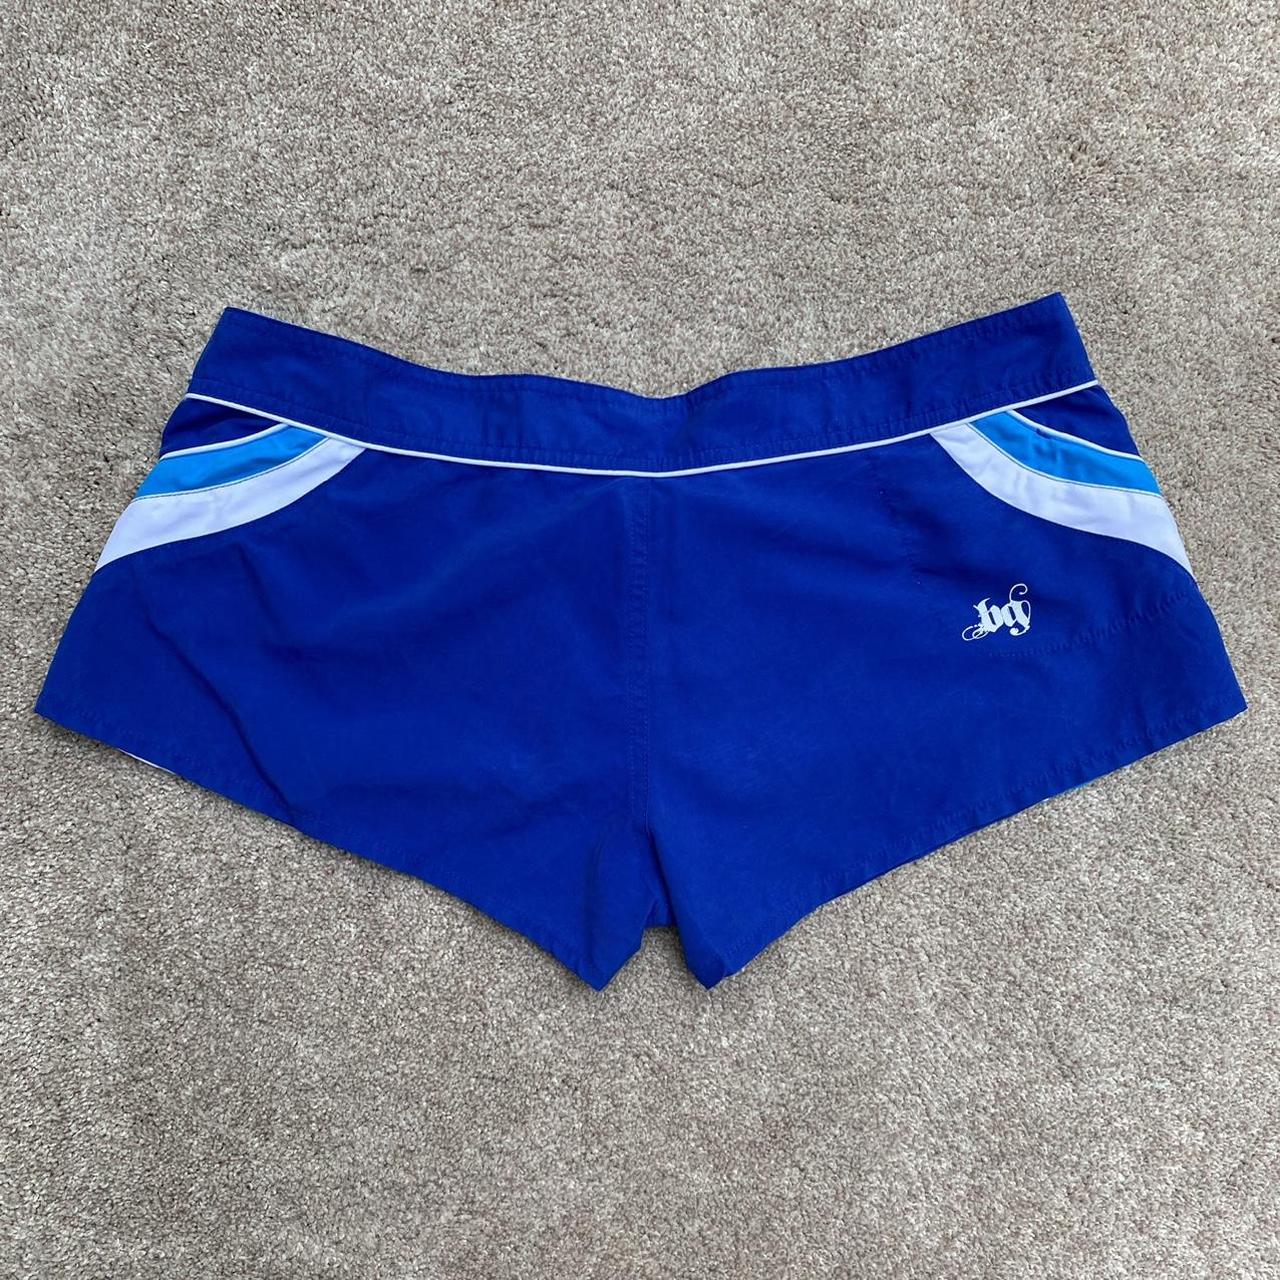 Body Glove Women's Blue and White Swim-briefs-shorts (2)